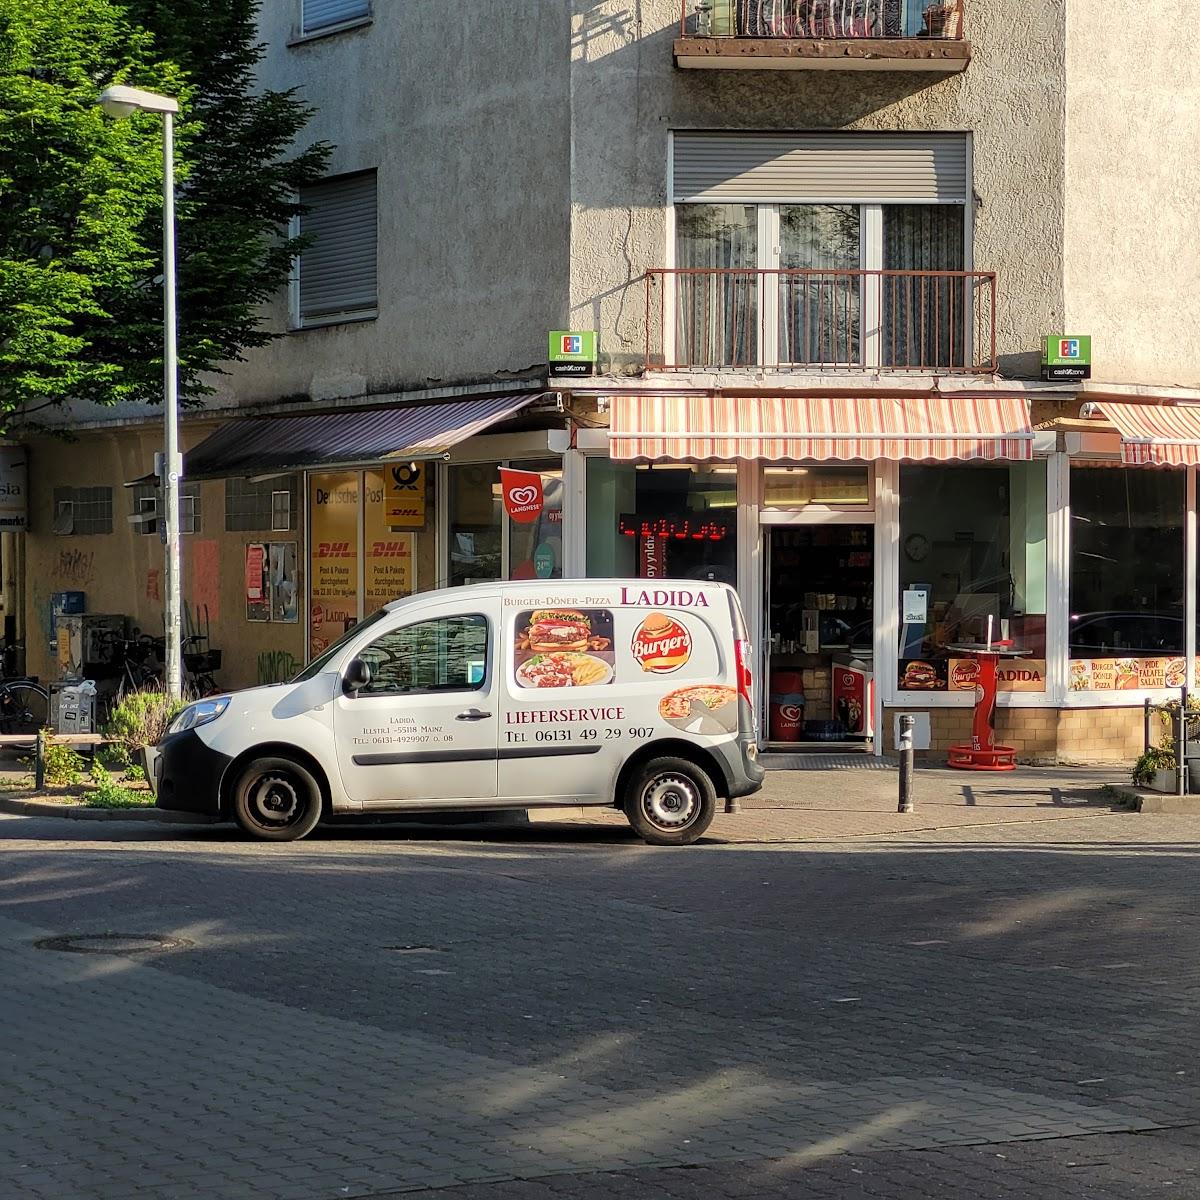 Restaurant "Ladida Burger Co" in Mainz